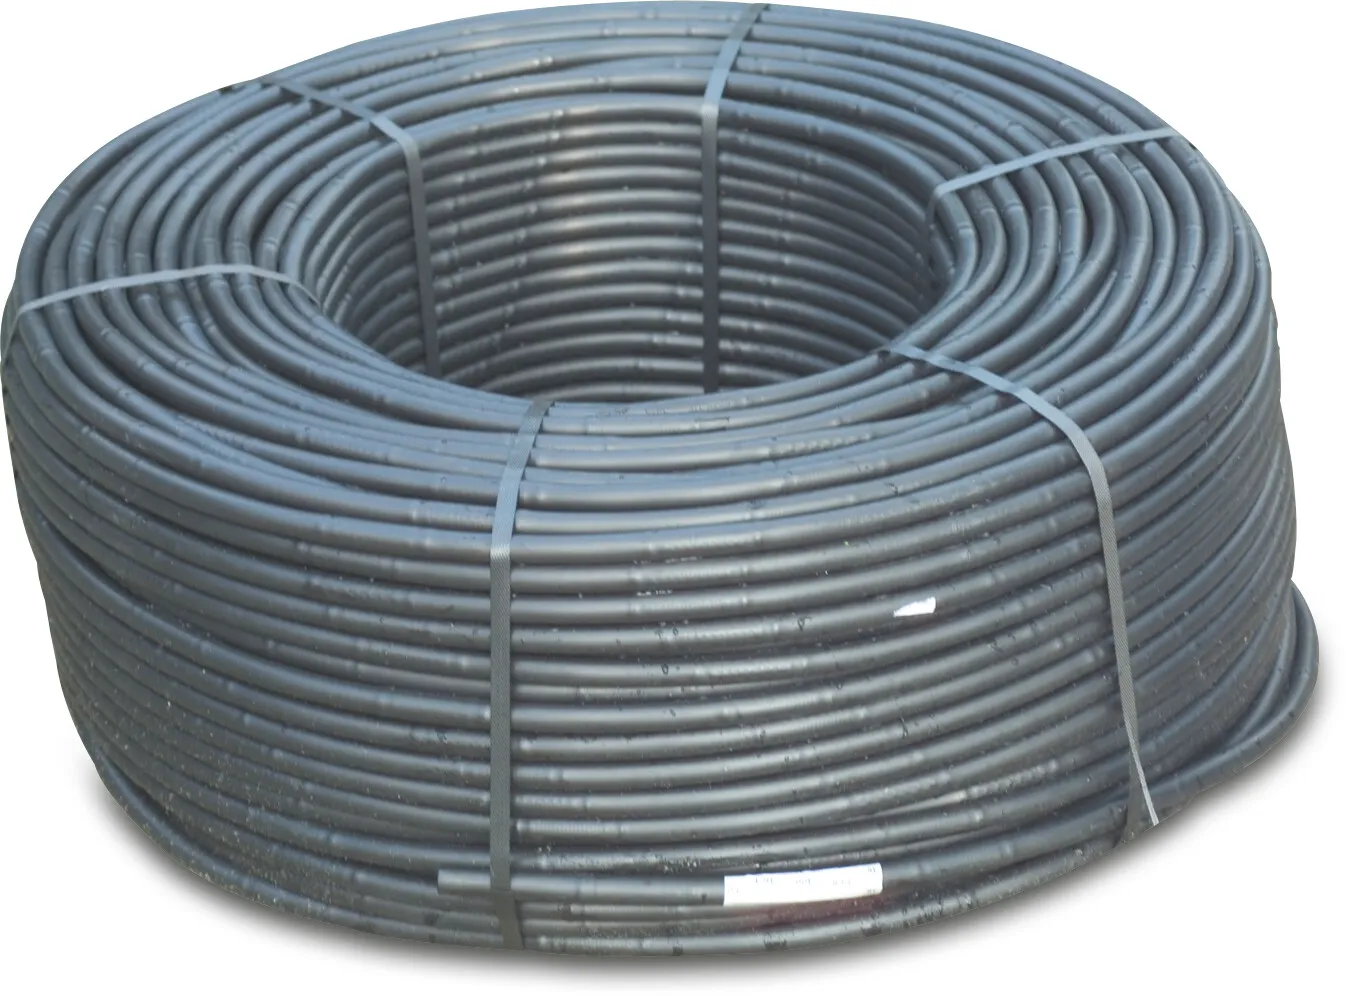 NaanDanJain Drip irrigation hose PE 16 mm x 1,0 mm 1,6ltr/h 30cm black 400m type PC inline